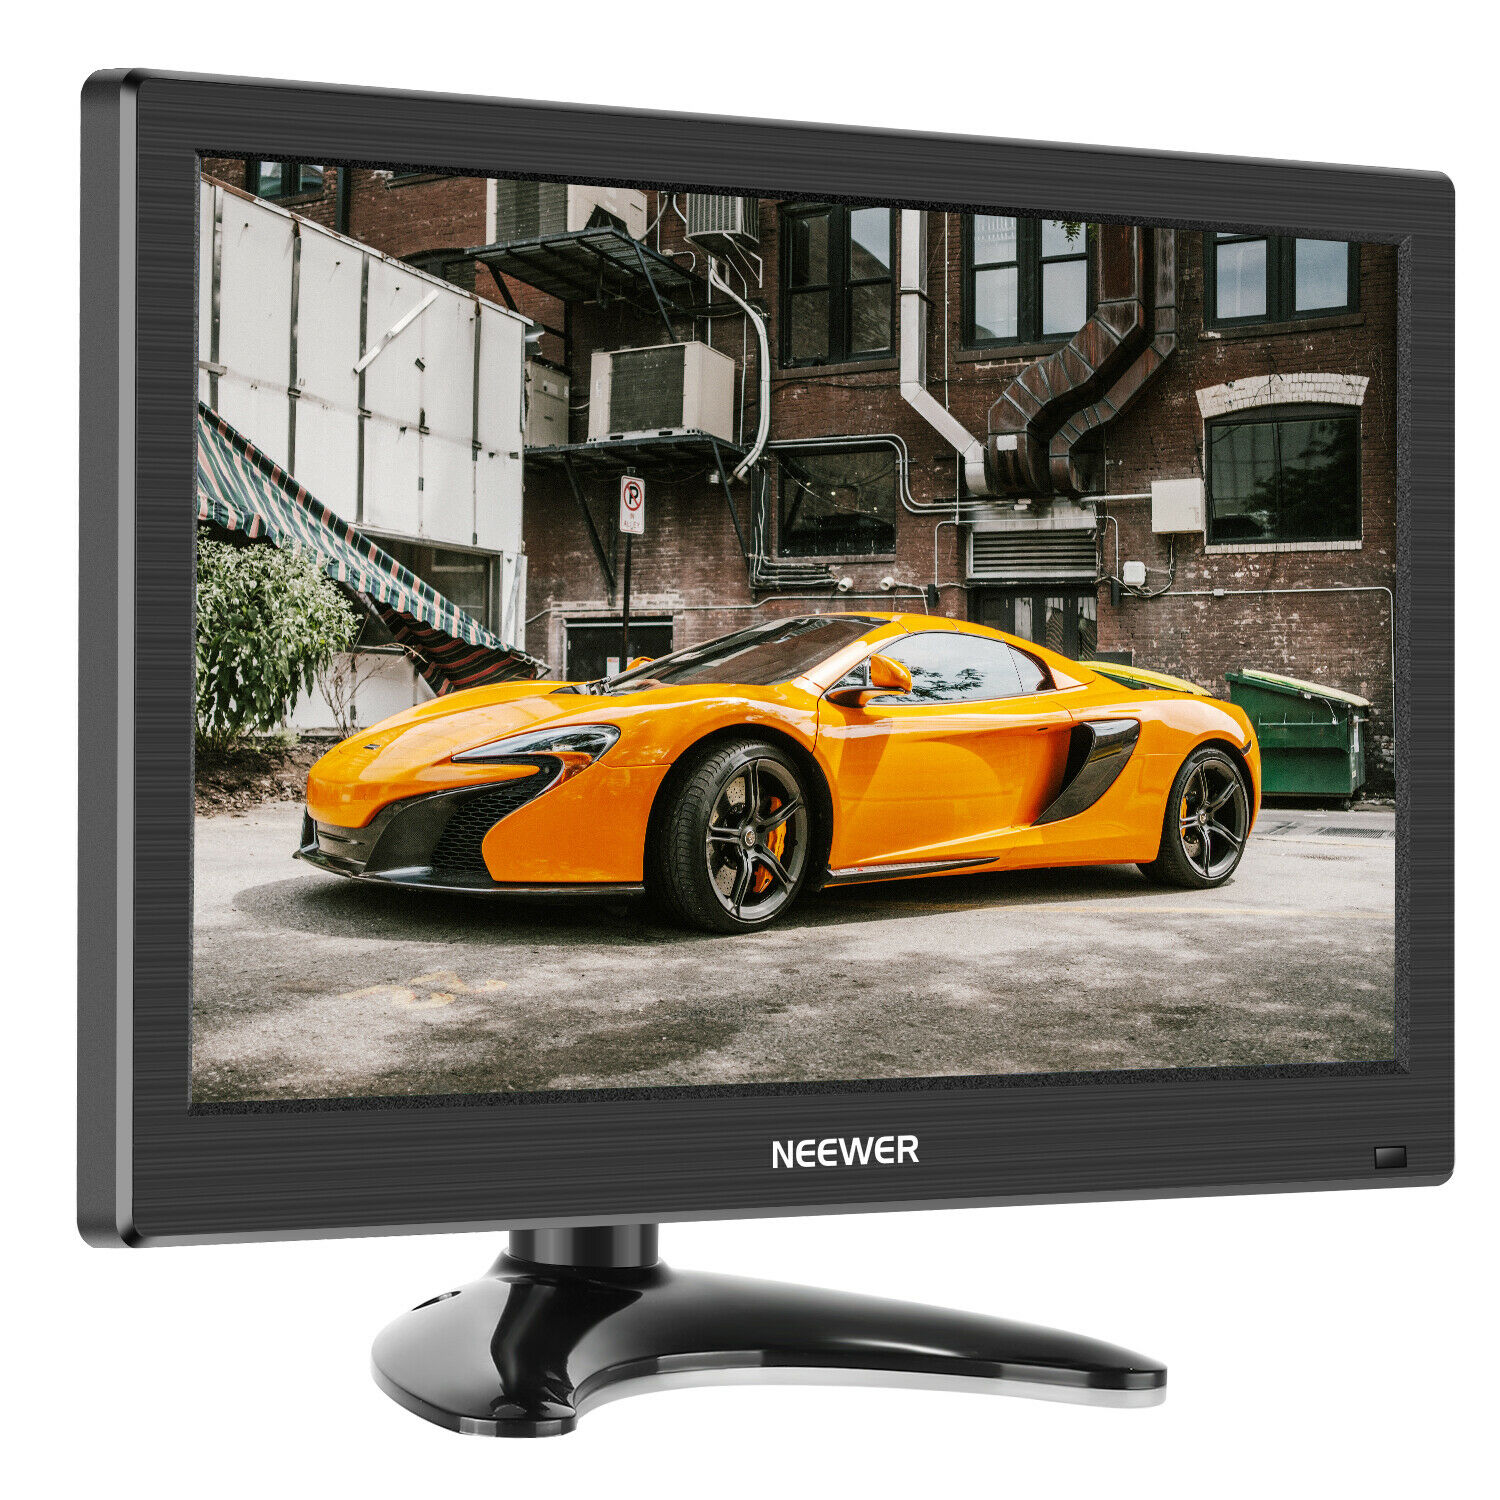 Monitor de seguridad de 11.6  HD 1920x1080  LCD TFT IPS entrada USB HDMI VGA BNC AV, Altavoz incorporado.